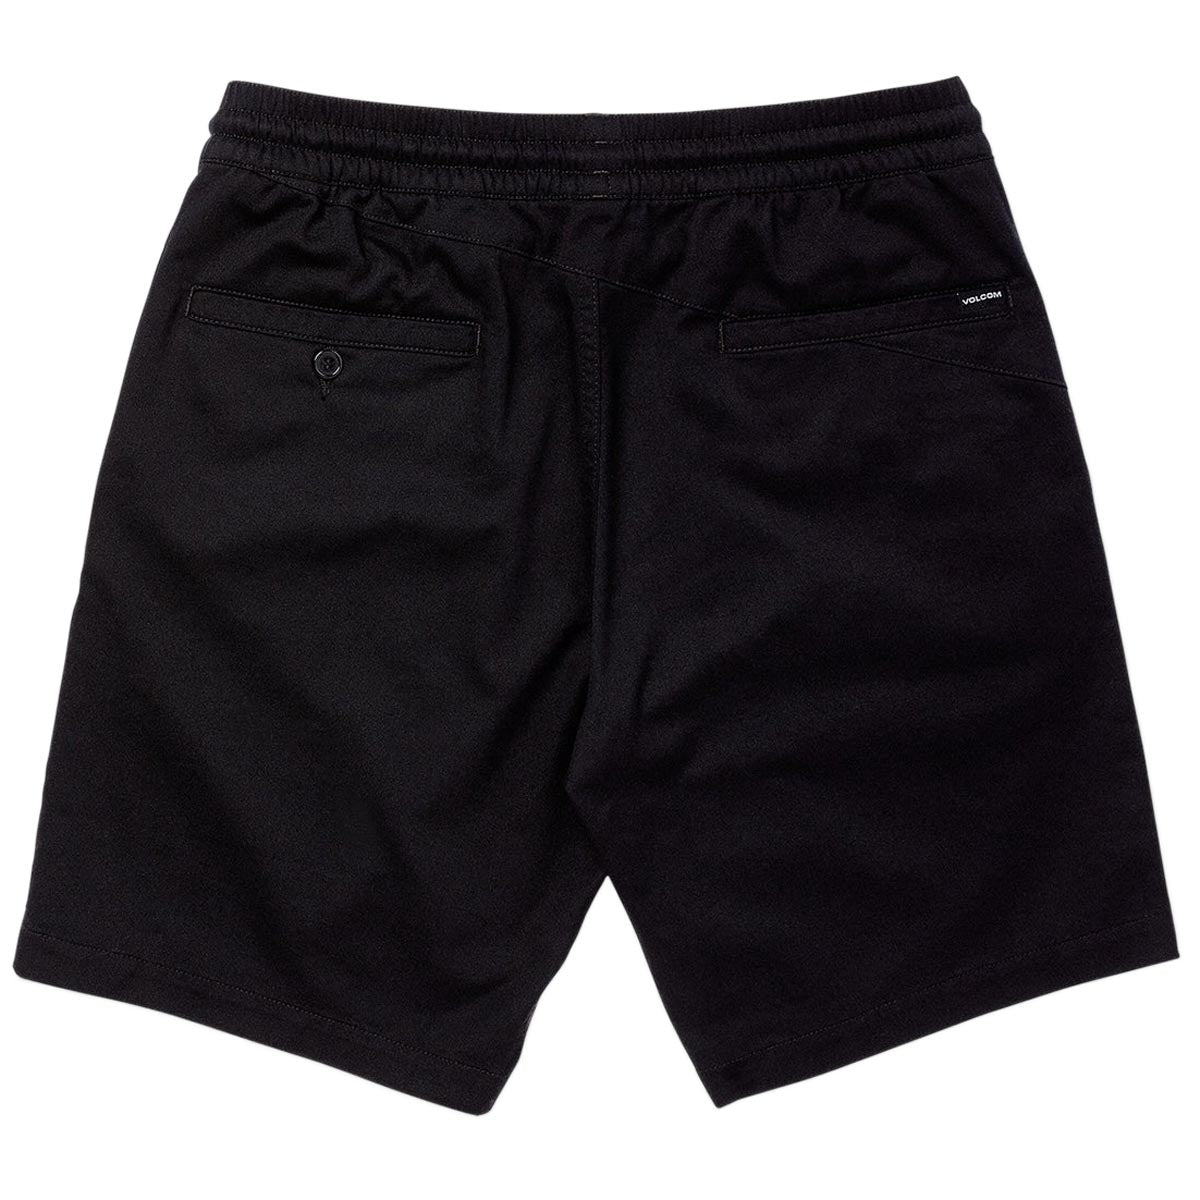 Volcom Frickin Ew 19 Shorts - Black image 2